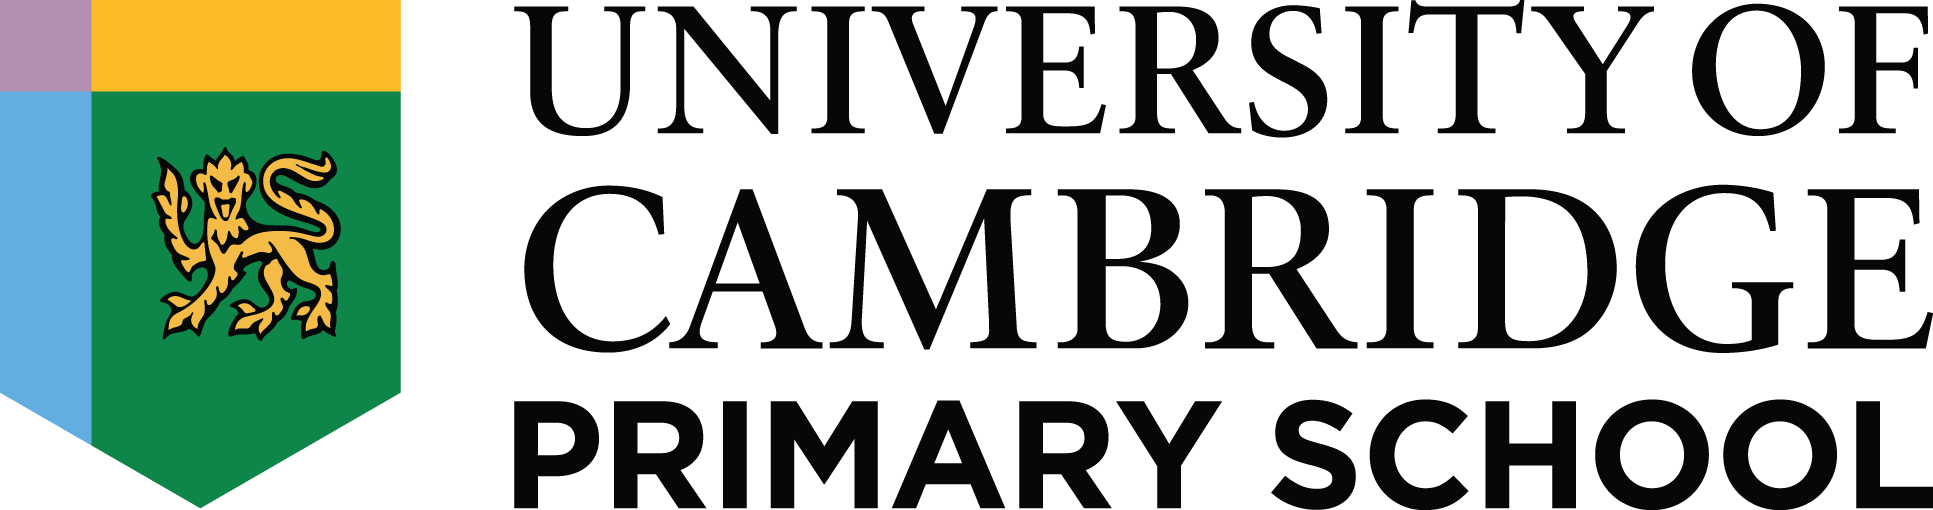 University of Cambridge Logo - University of Cambridge Primary School - Donations and Fundraising